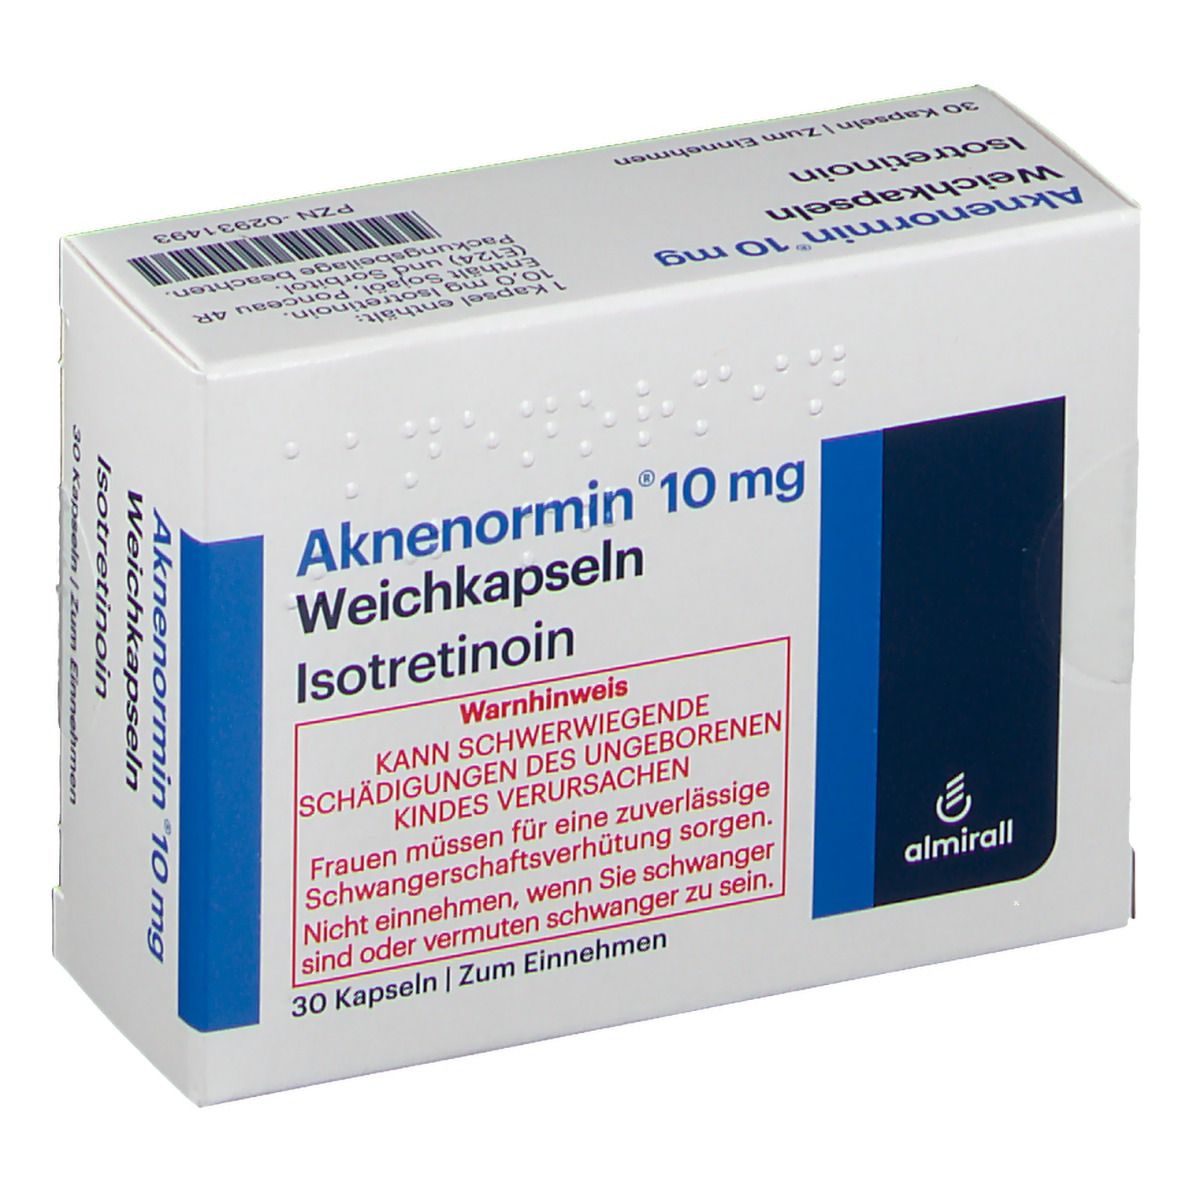 Aknenormin® 10 mg